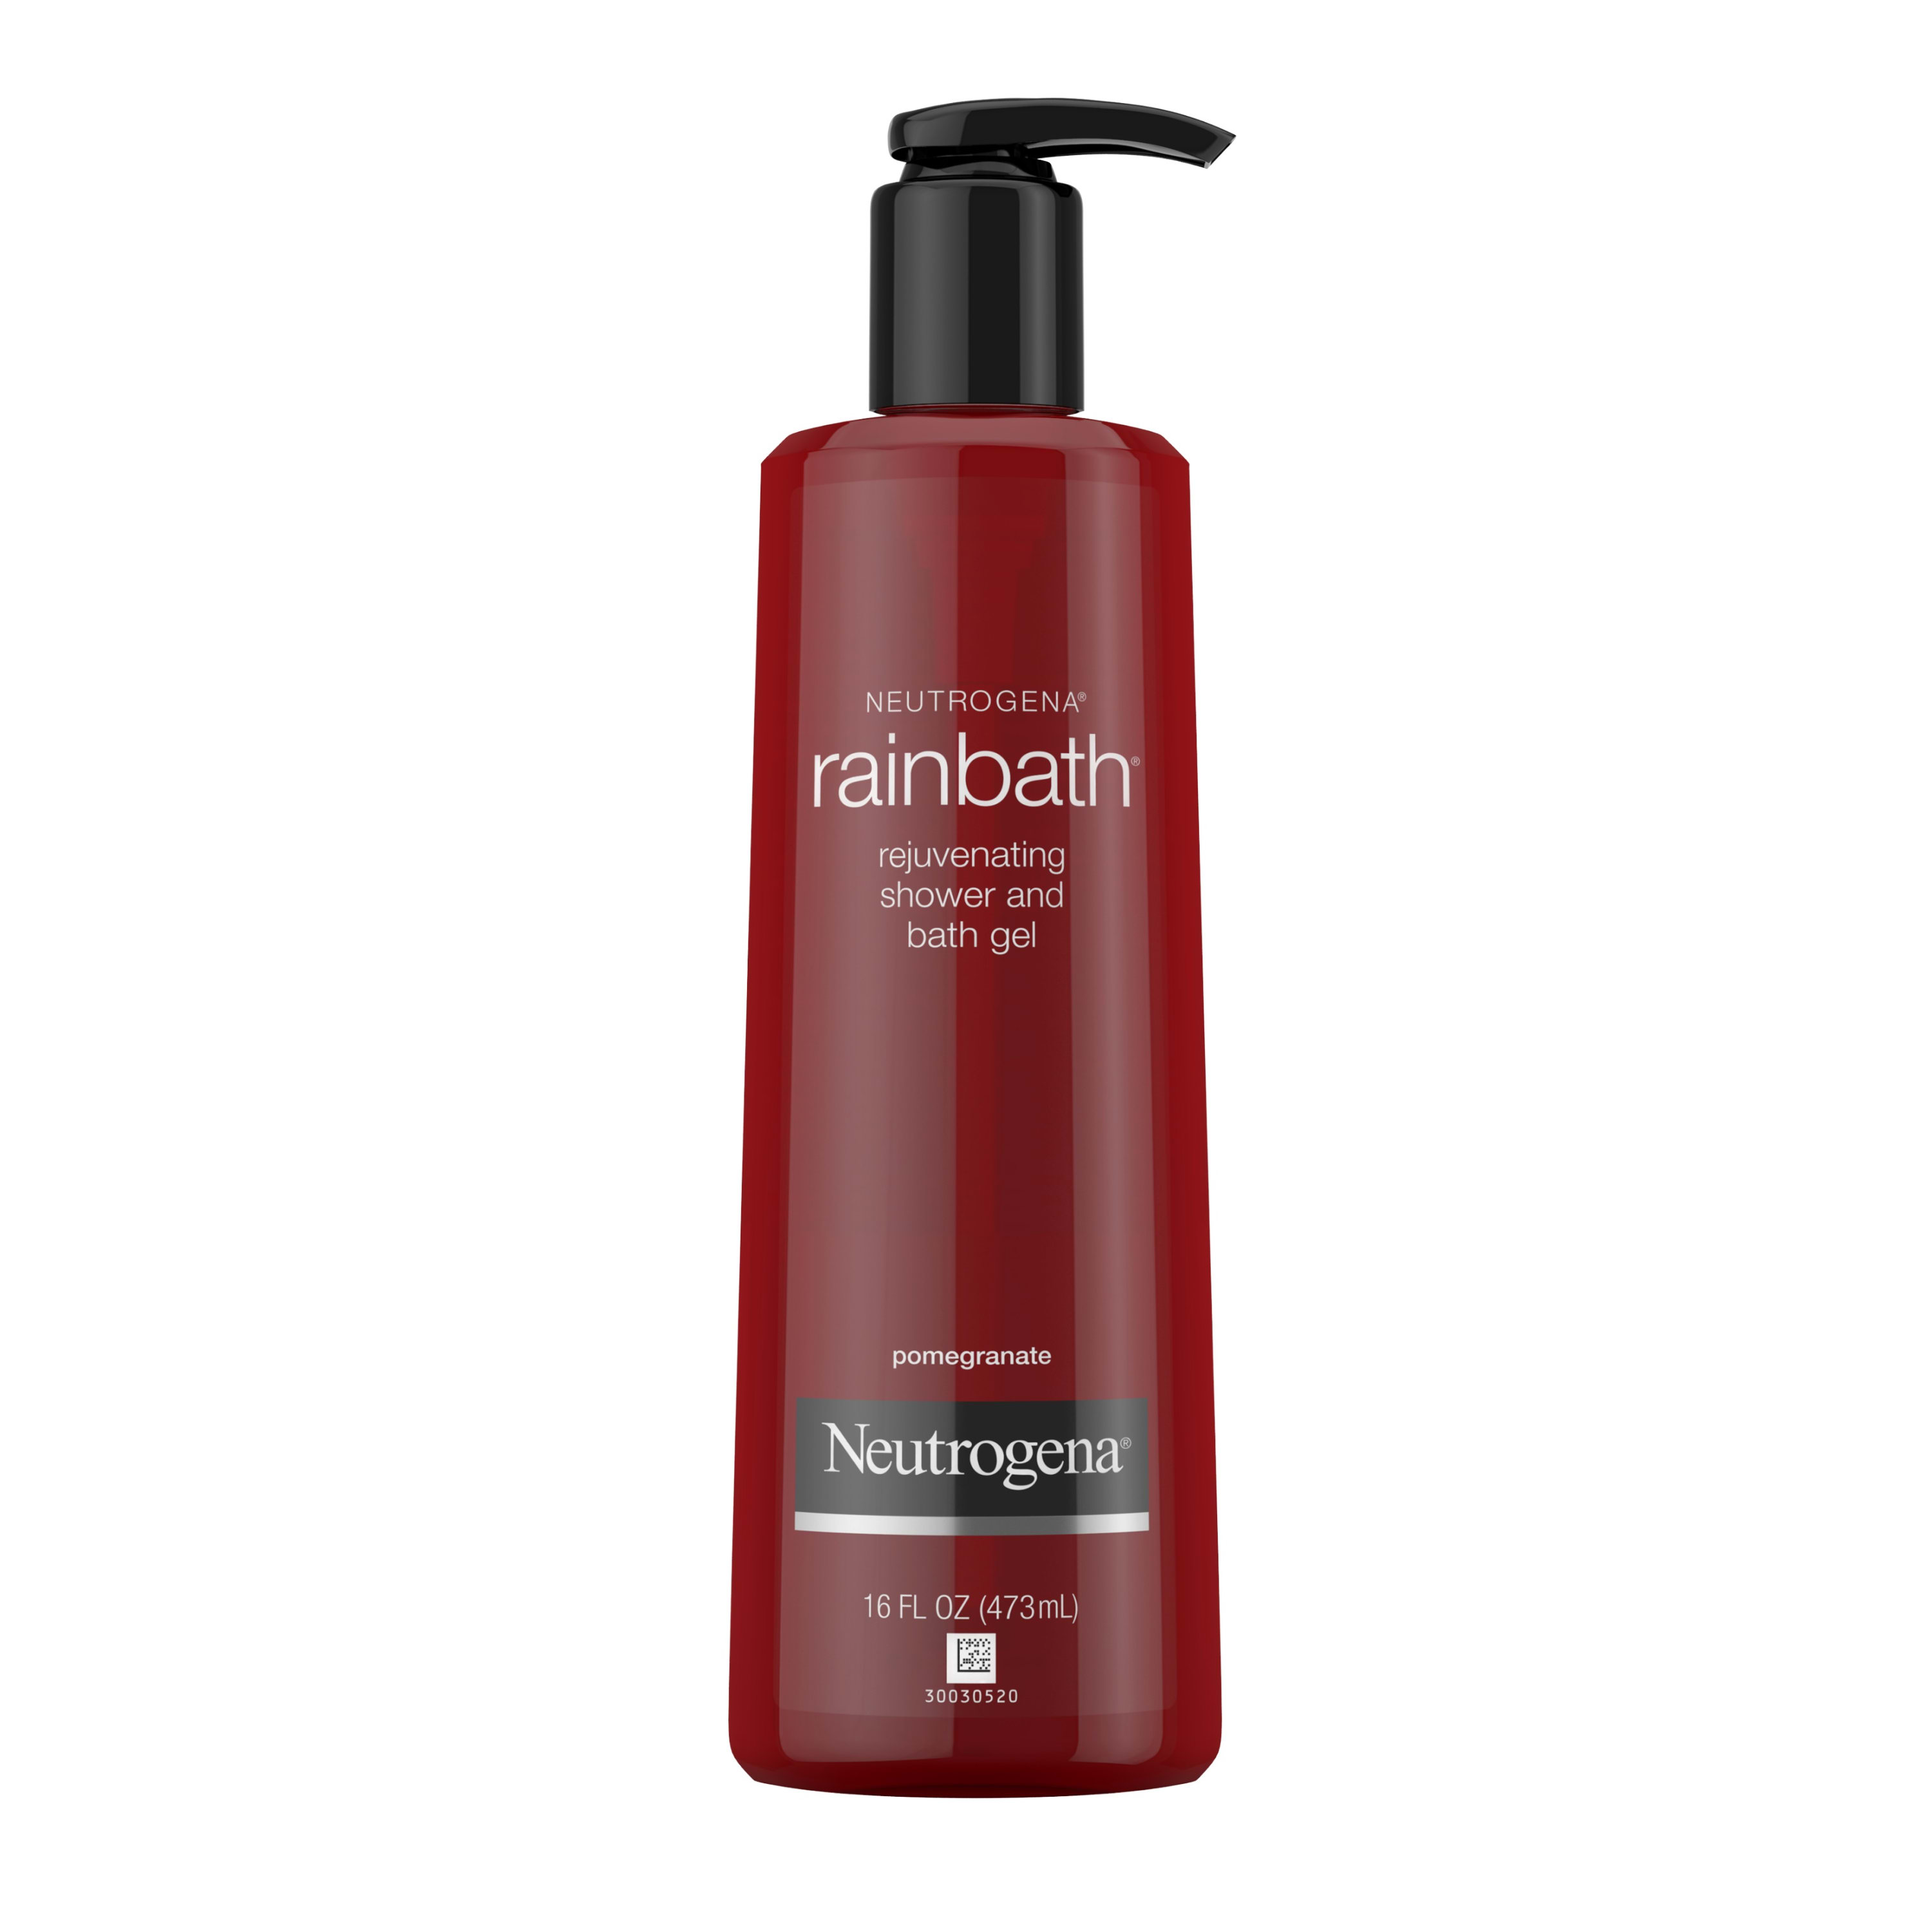 Neutrogena Rainbath Rejuvenating Shower/Bath Gel, Pomegranate, 16 oz - image 7 of 16